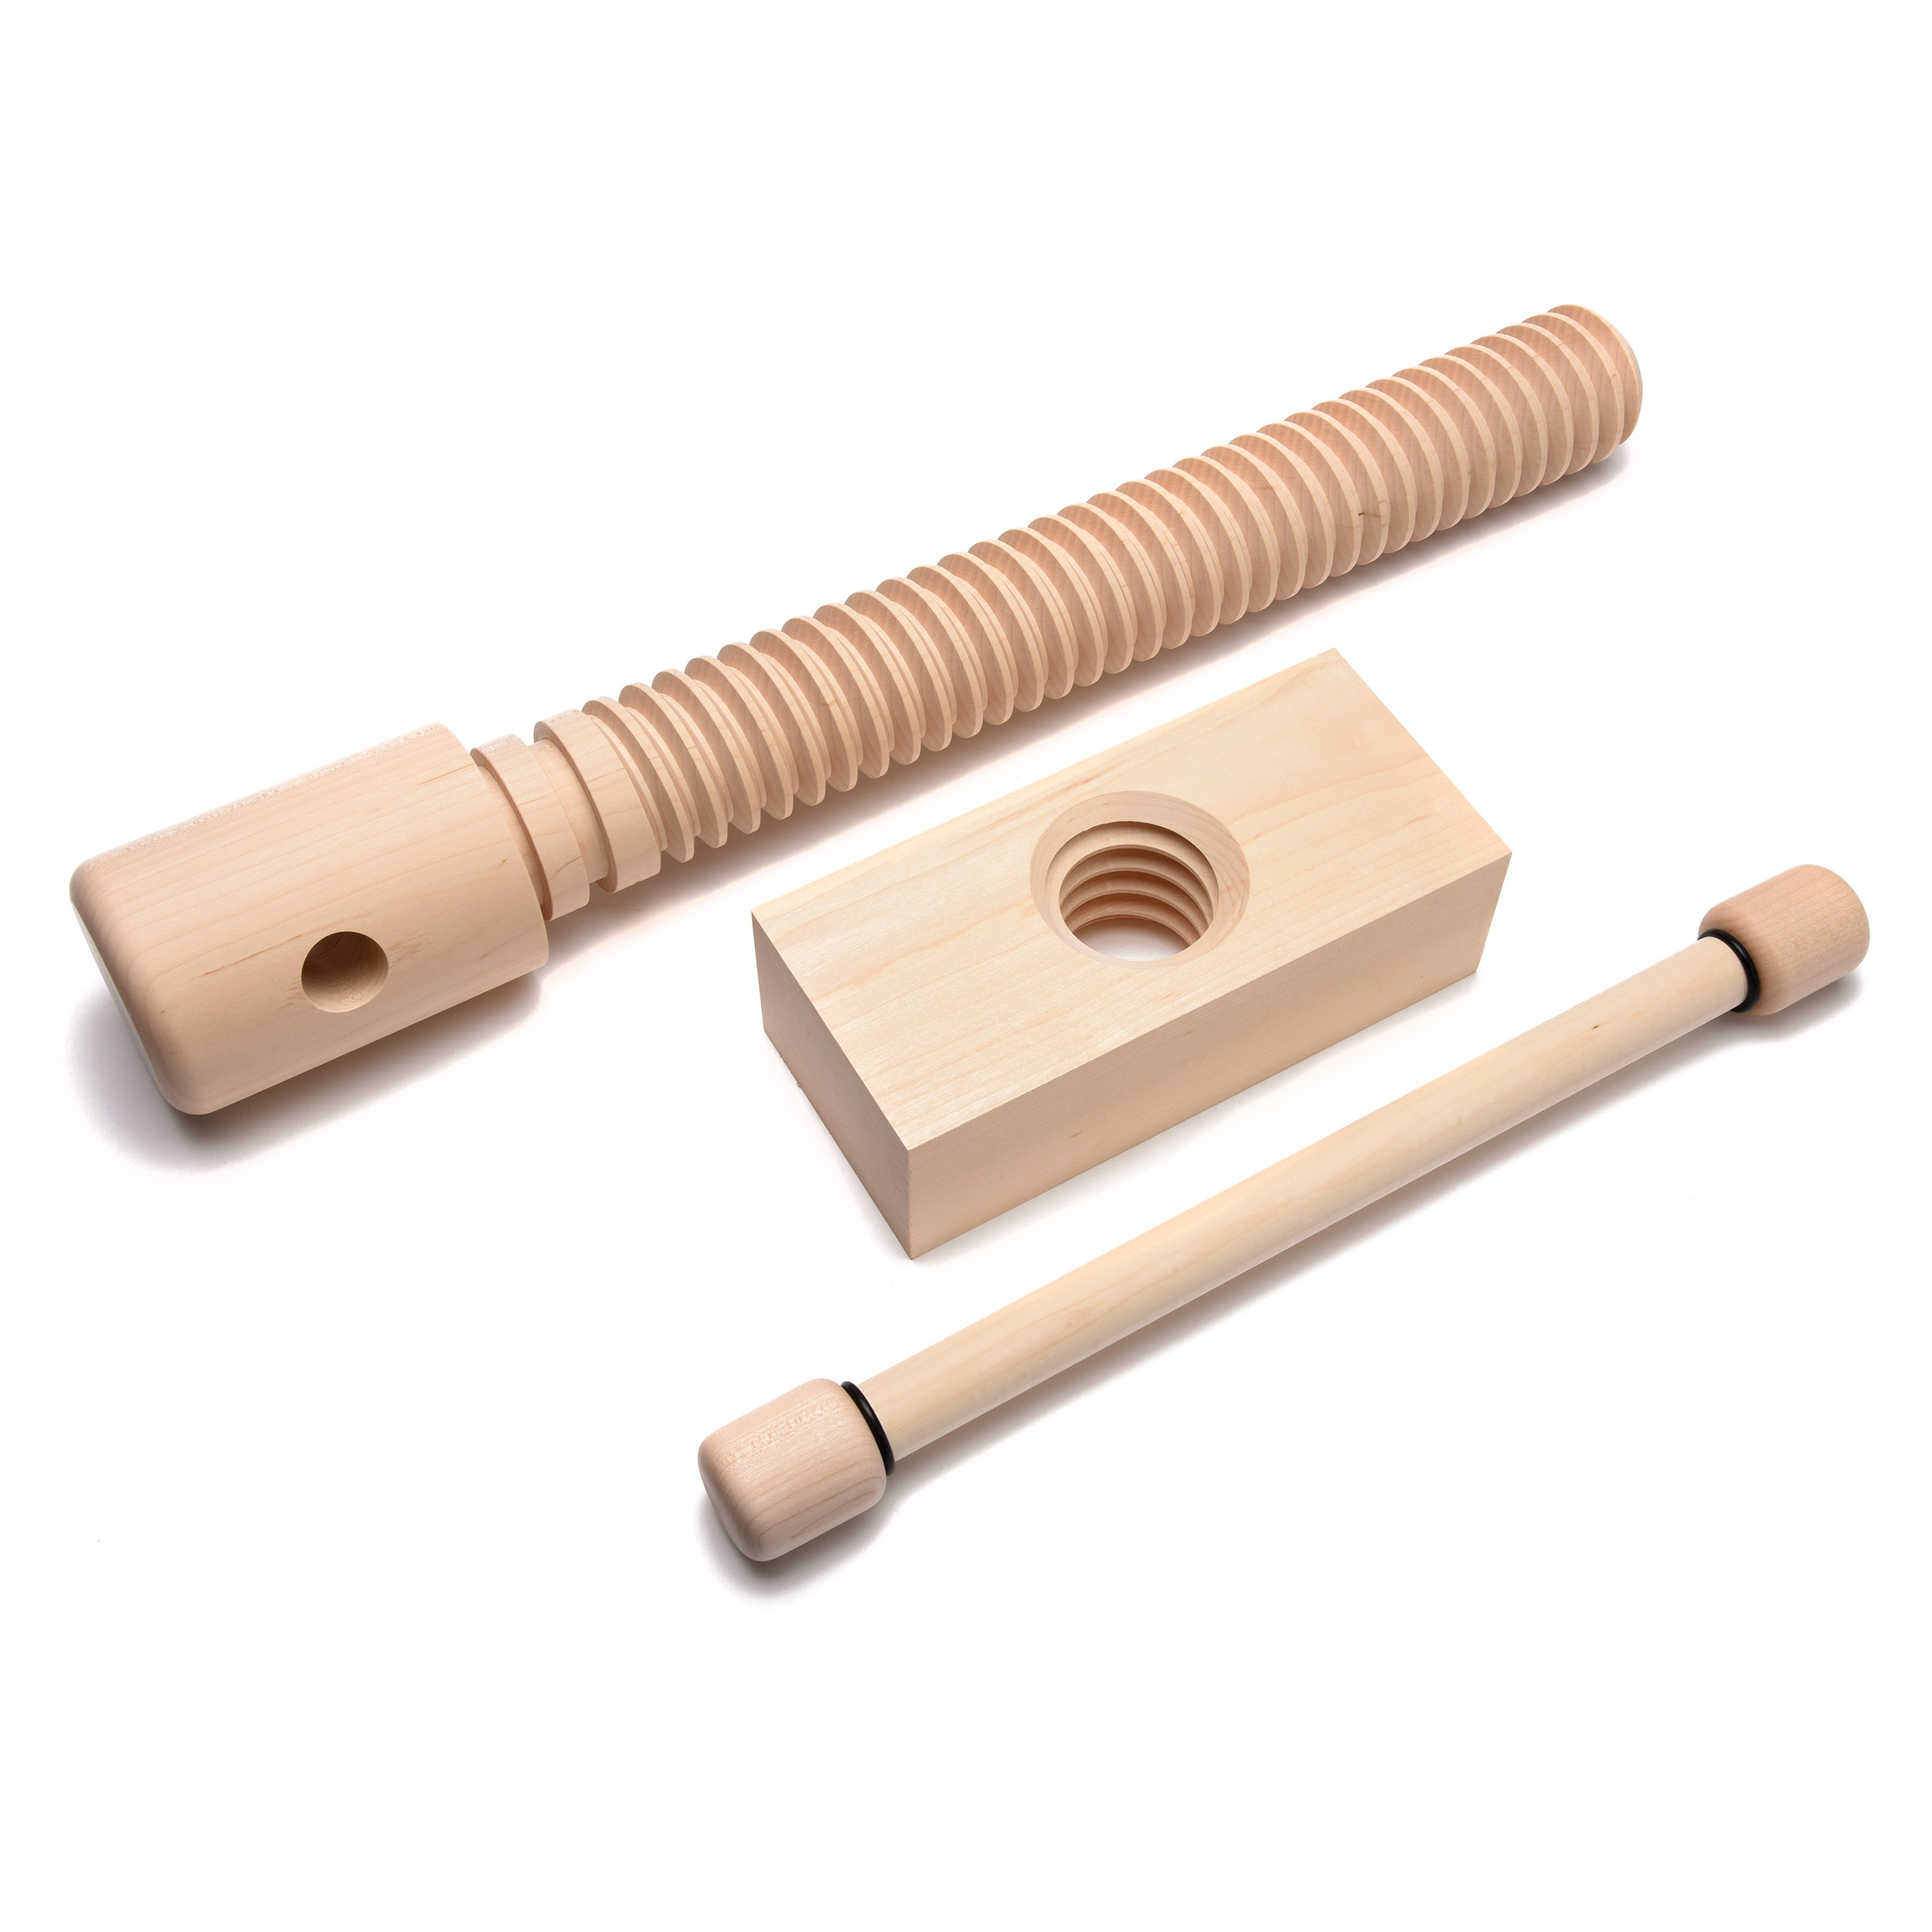 Wood Vise Screw - Standard Kit